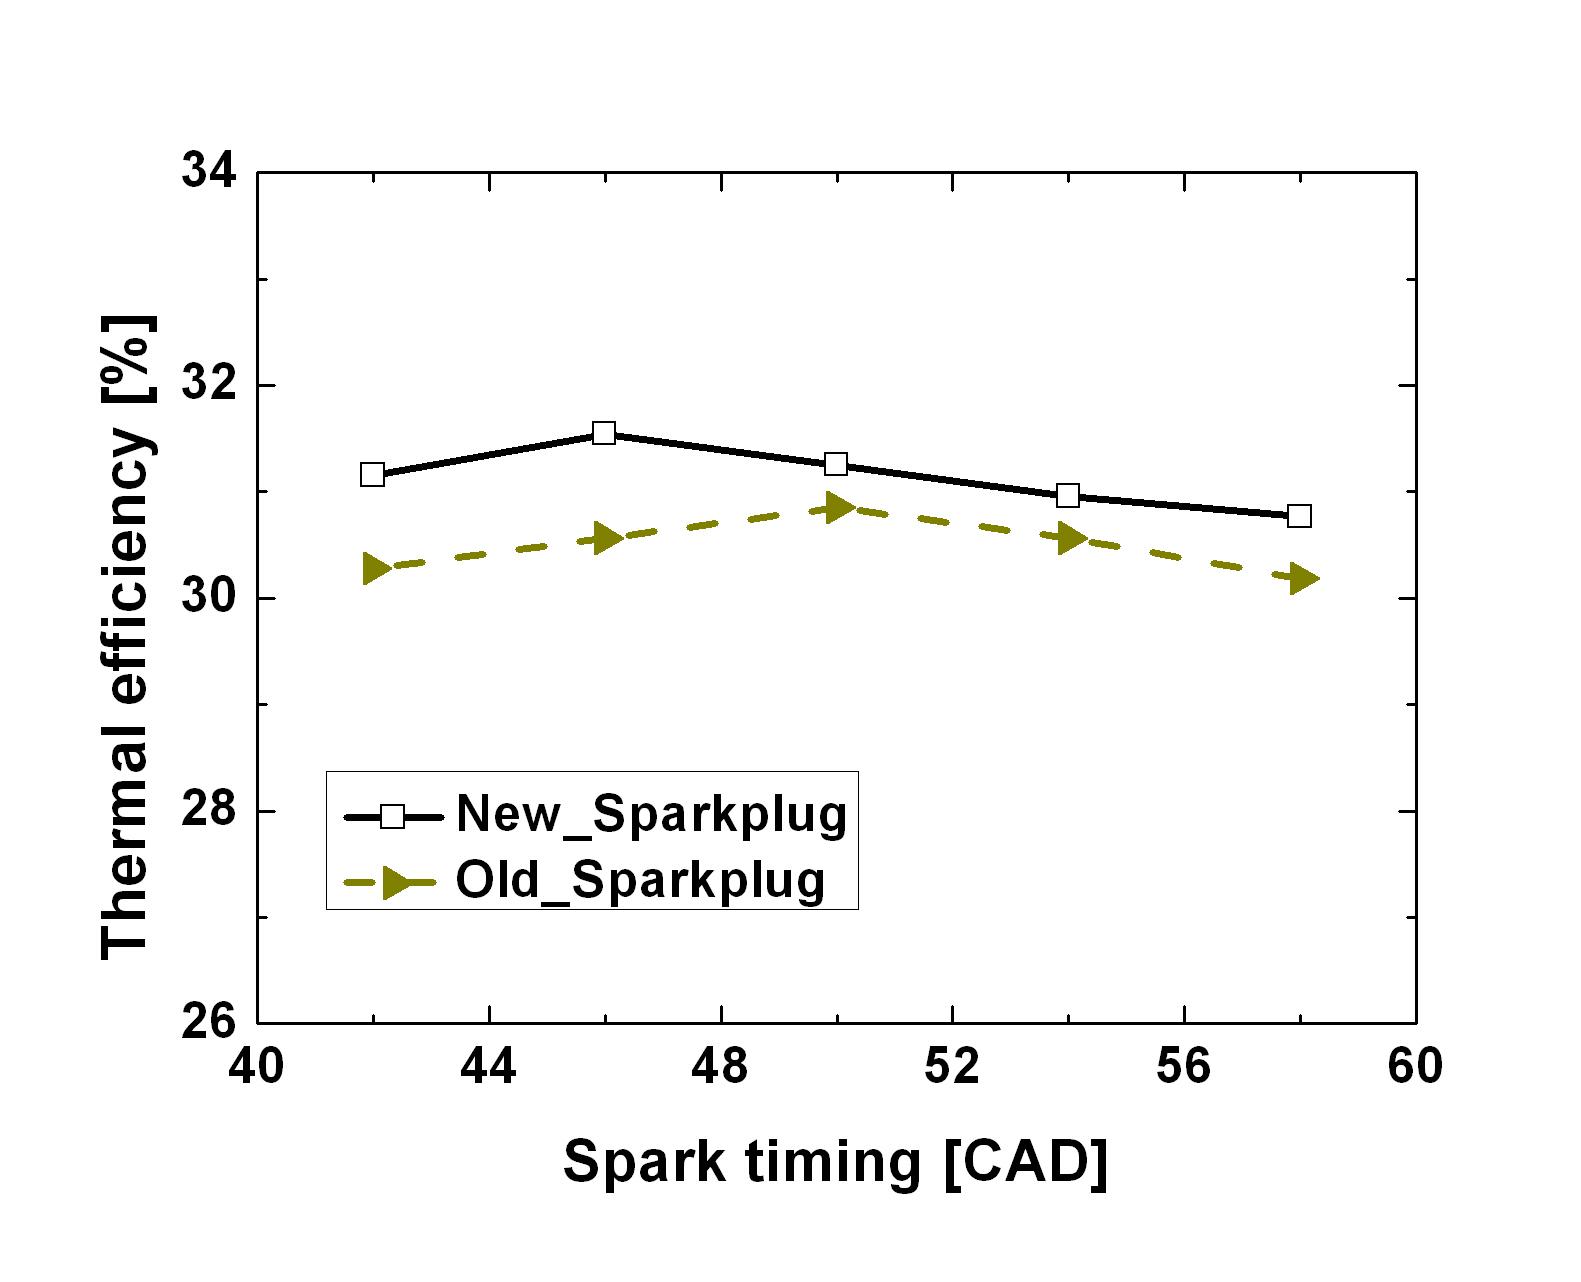 Spark plug 교체에 따른 엔진효율 비교 (60kW, 80% 질소 희석비)